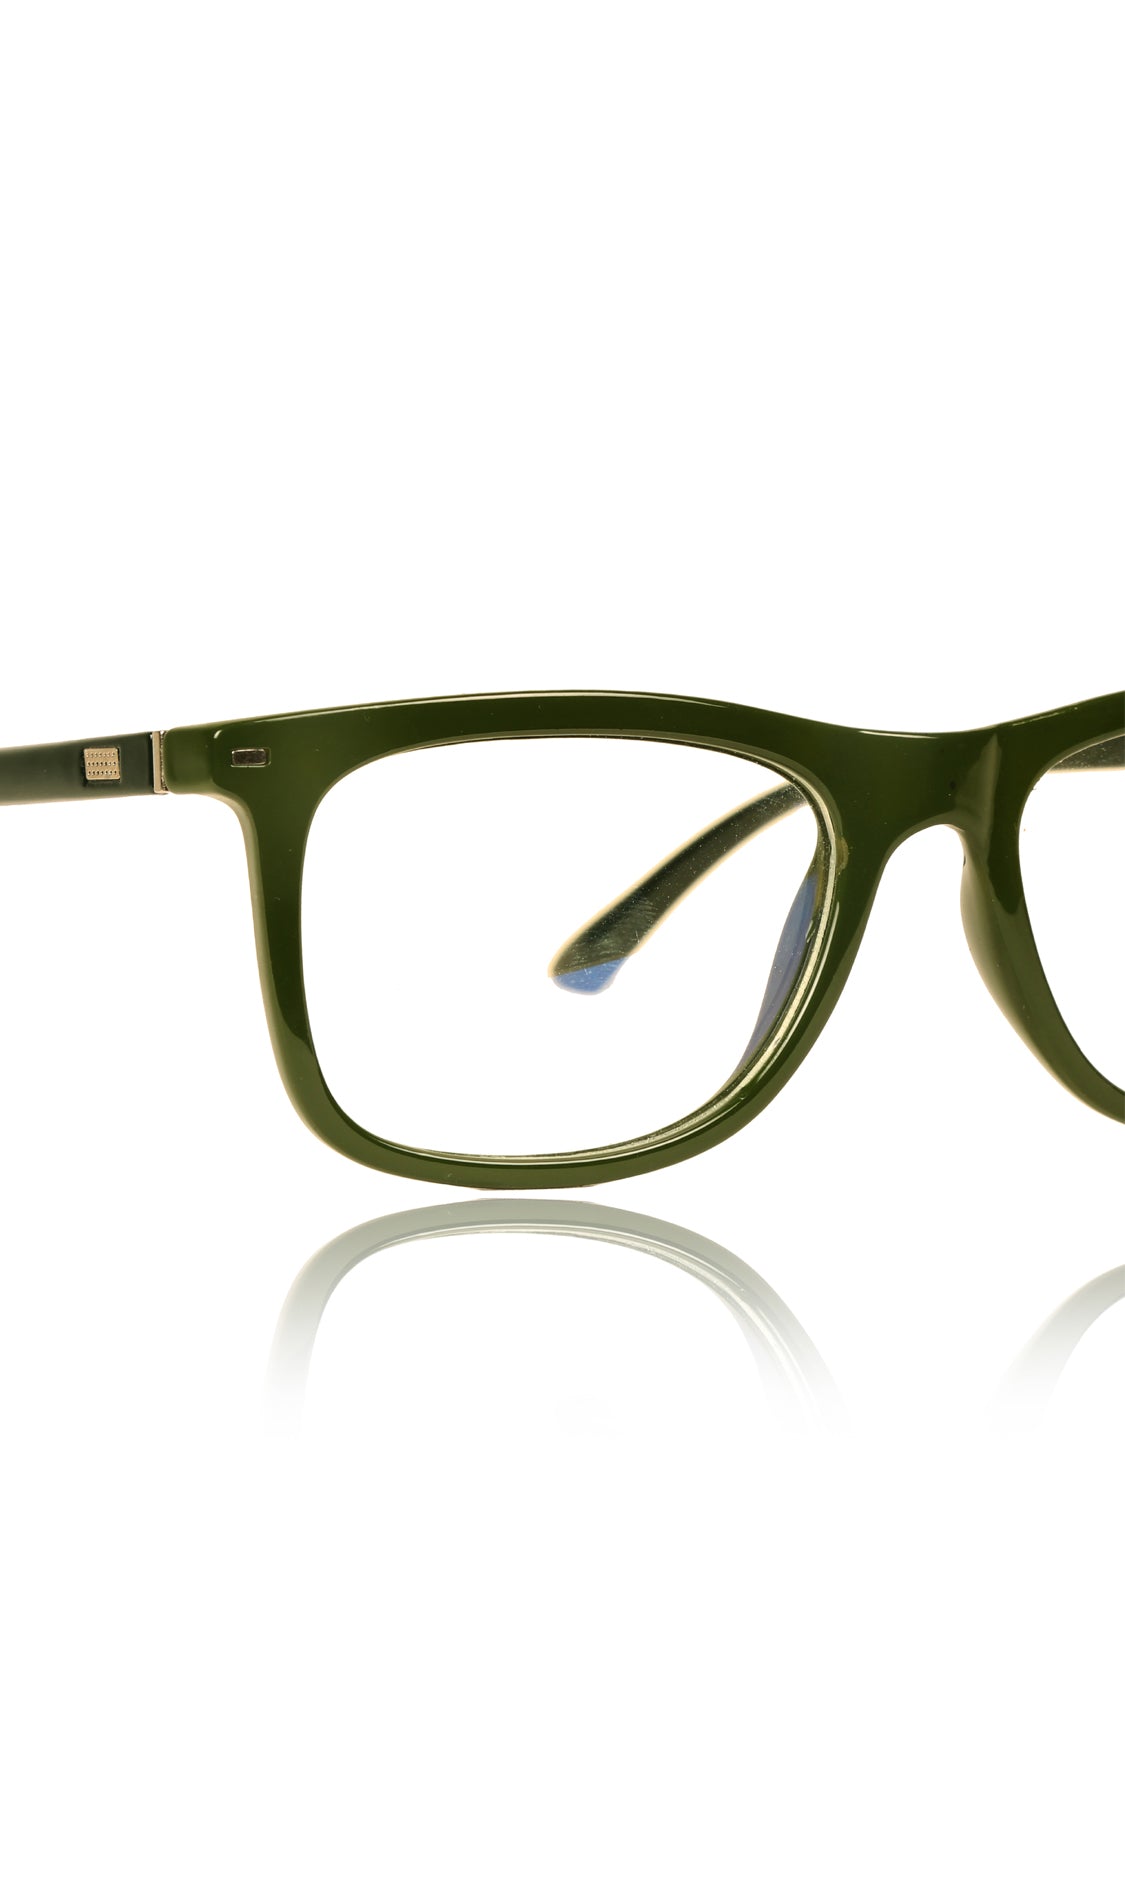 Jodykoes® Colour Frame Series Eyewears | Blue Rays Protection Wayfare Stylish Spectacles With Anti Glare Eyeglasses For Men and Women Eyewears (Leaf Green) - Jodykoes ®